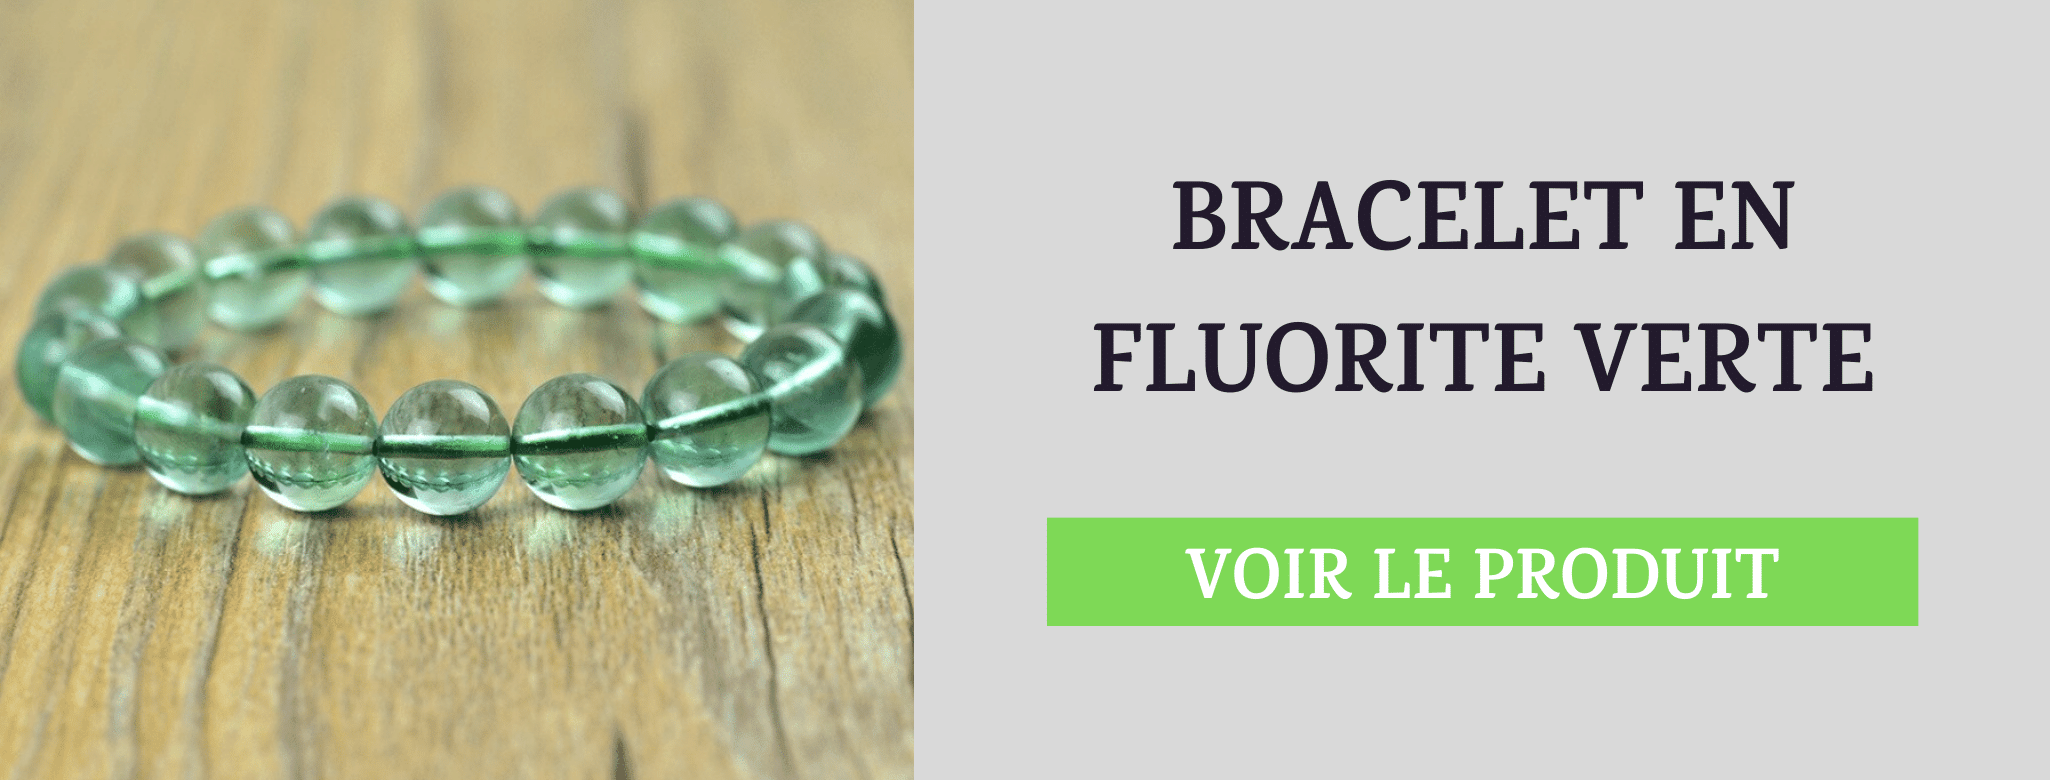 Bracelet Fluorite Verte